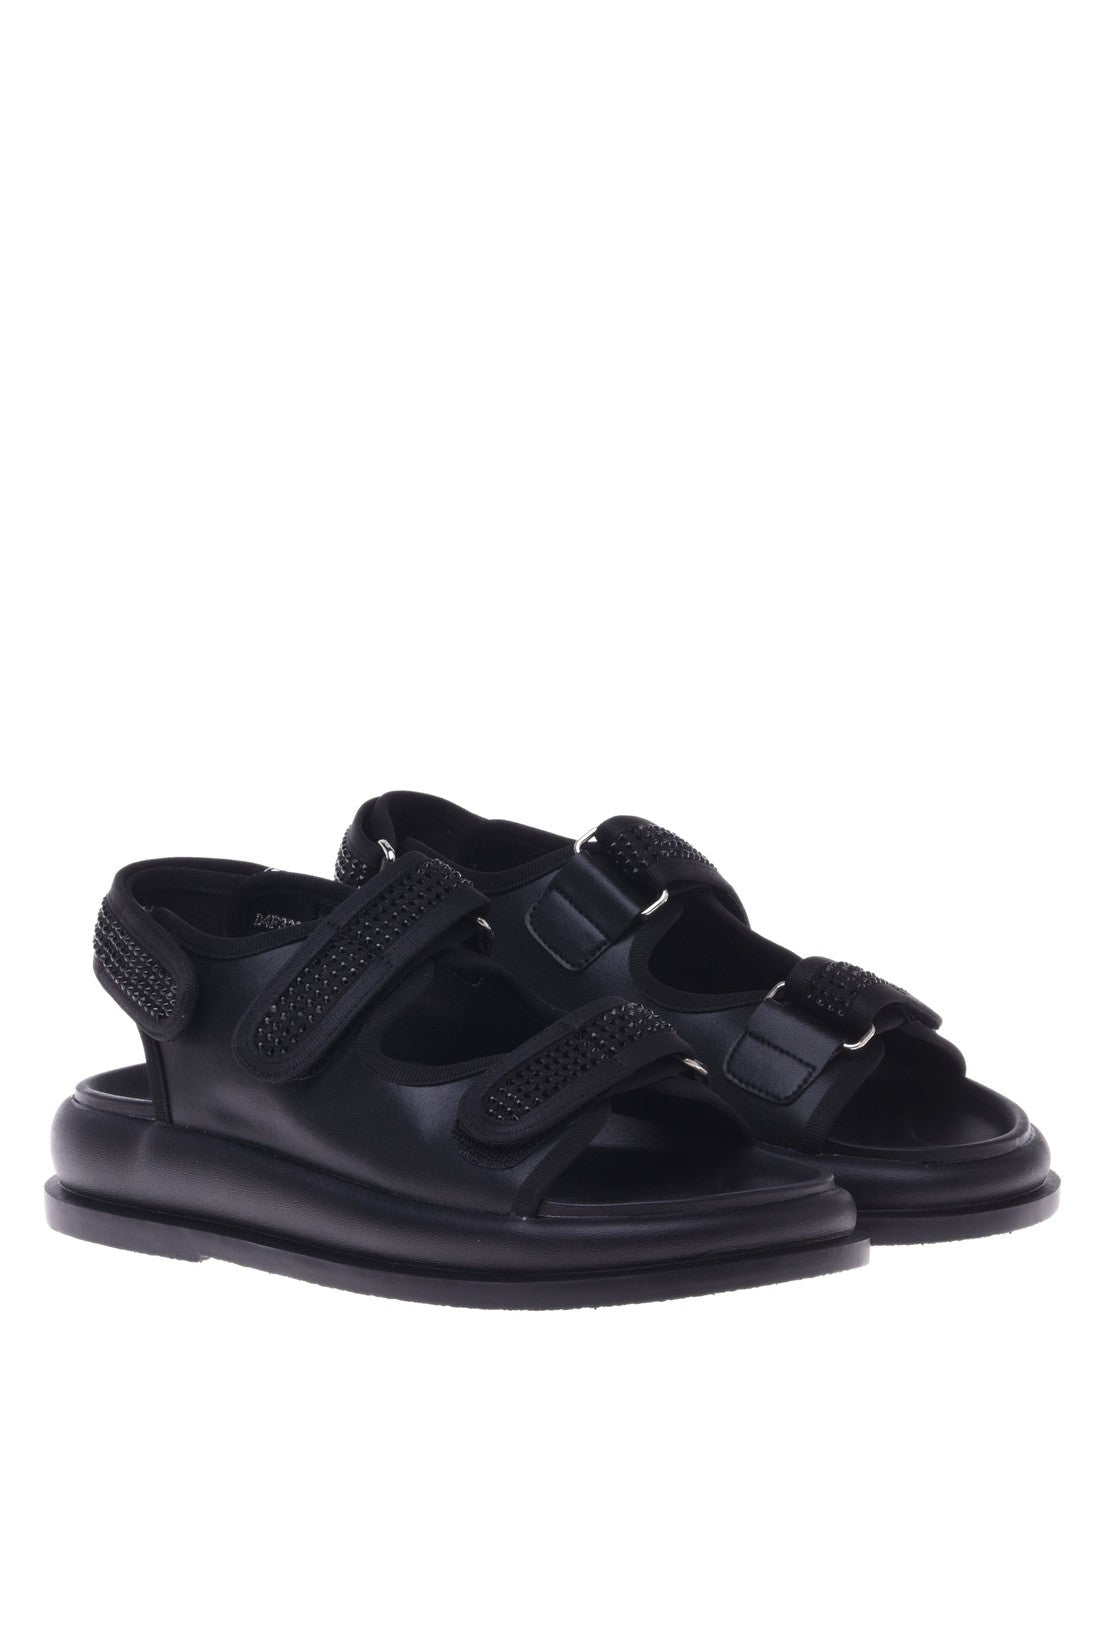 BALDININI-OUTLET-SALE-Sandal-in-black-calfskin-with-rhinestones-Sandalen-ARCHIVE-COLLECTION-3.jpg